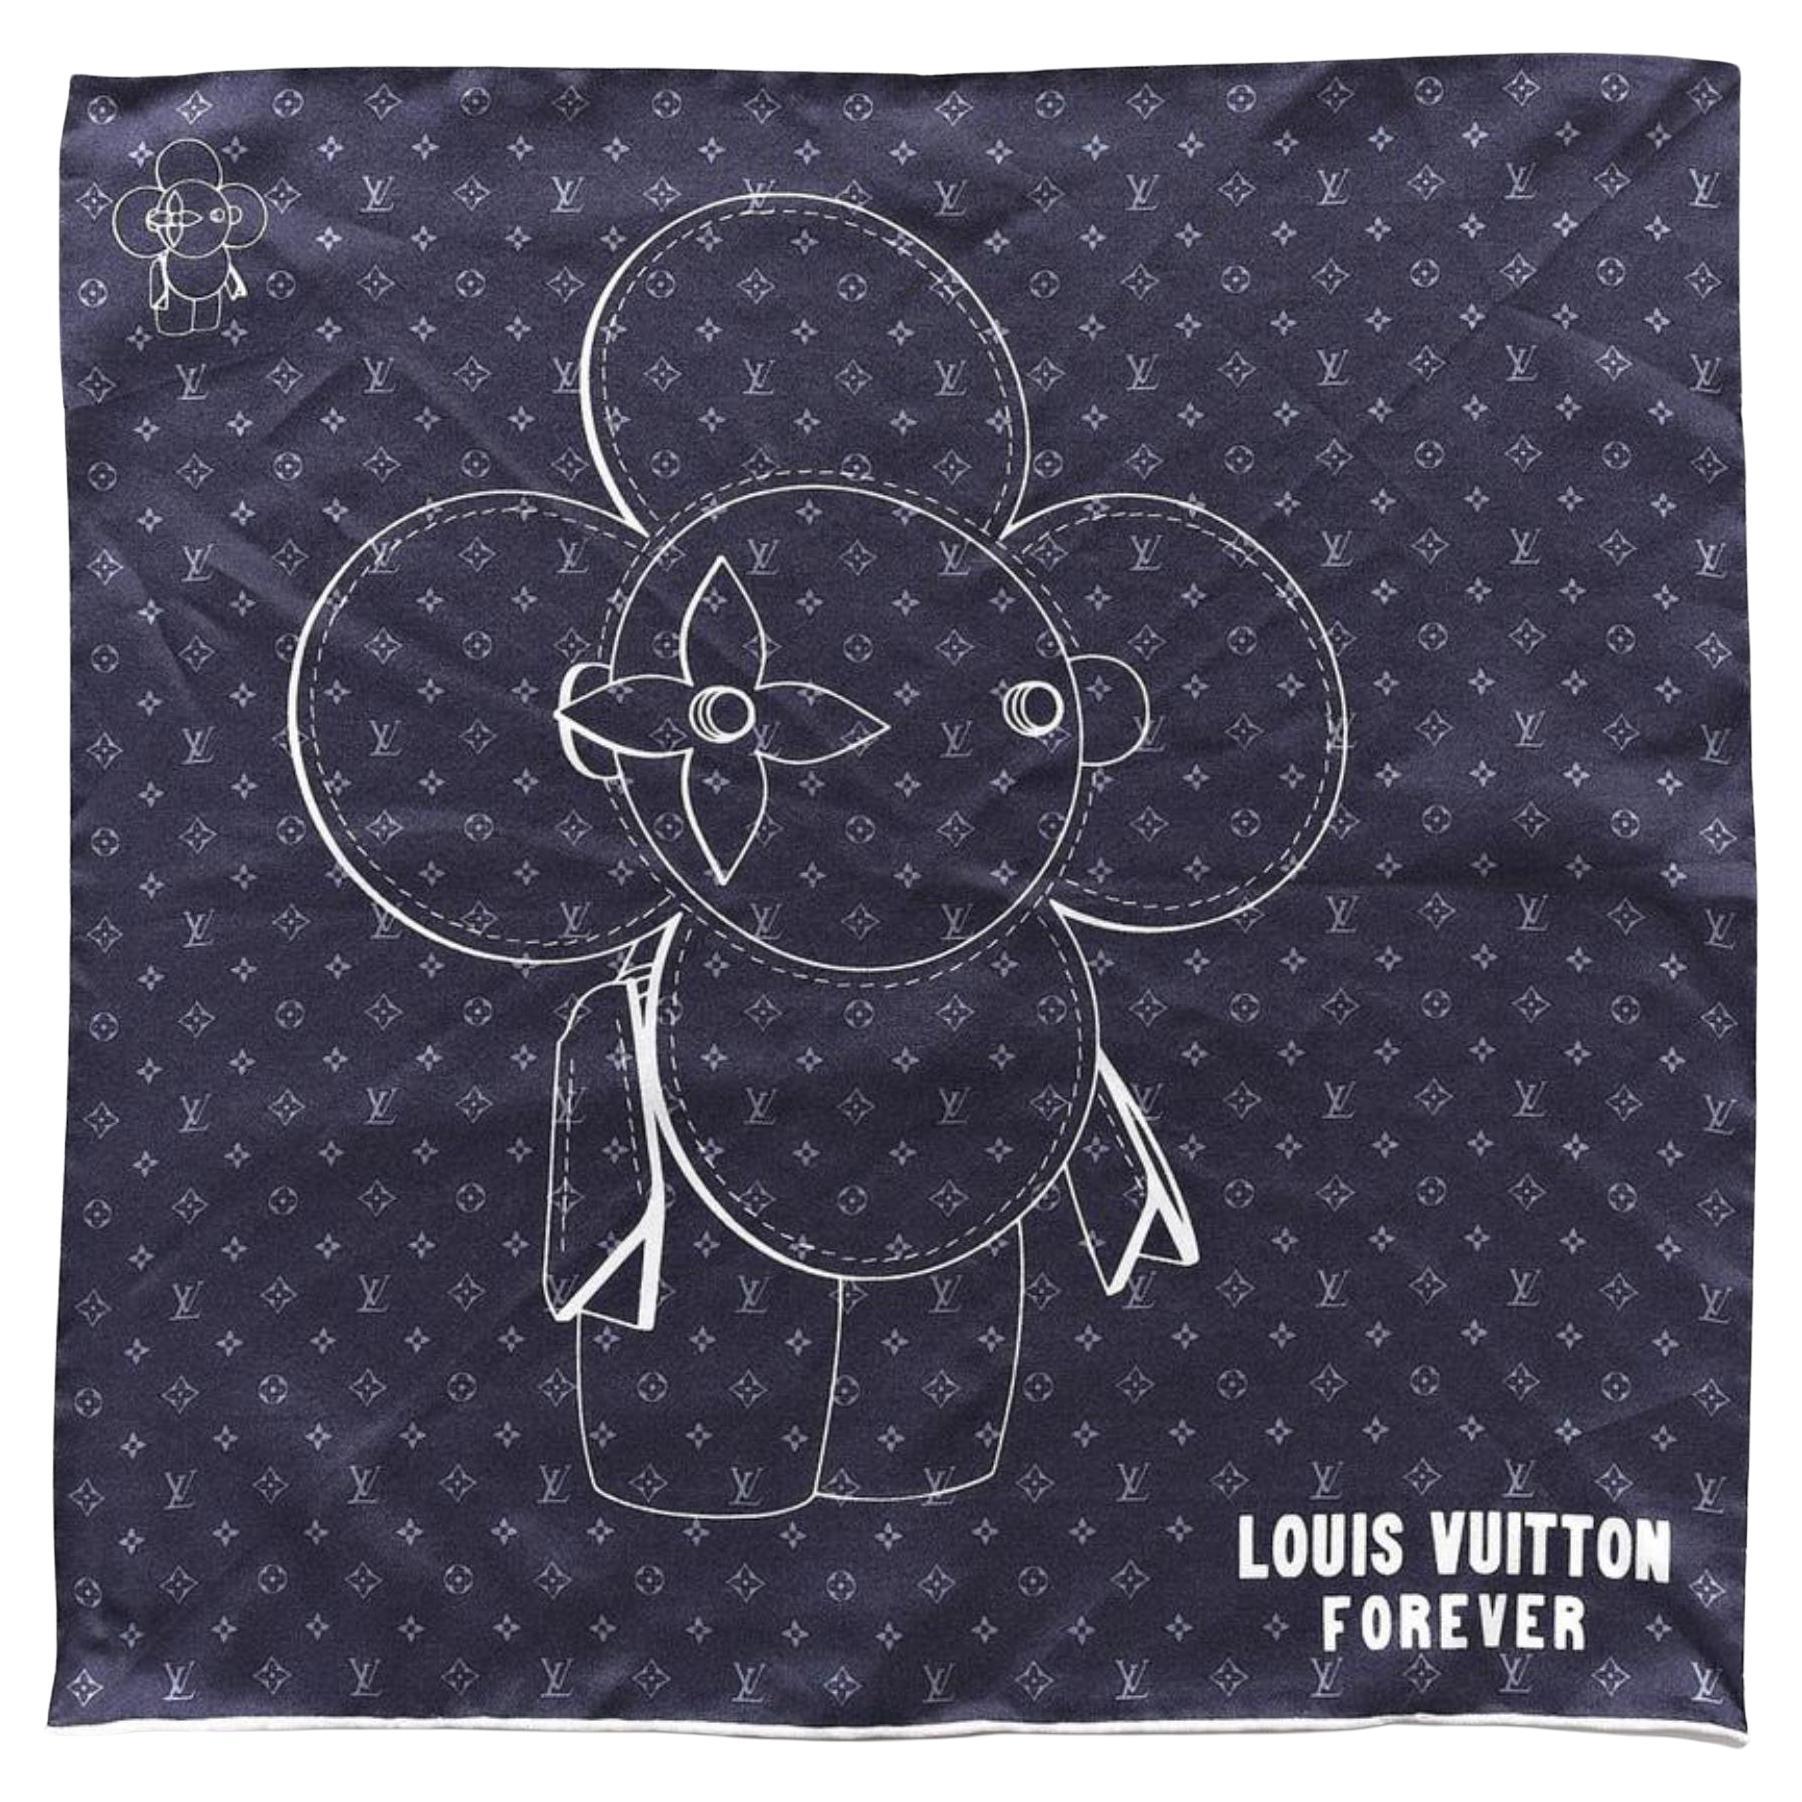 Louis Vuitton Bandana Print - 2 For Sale on 1stDibs